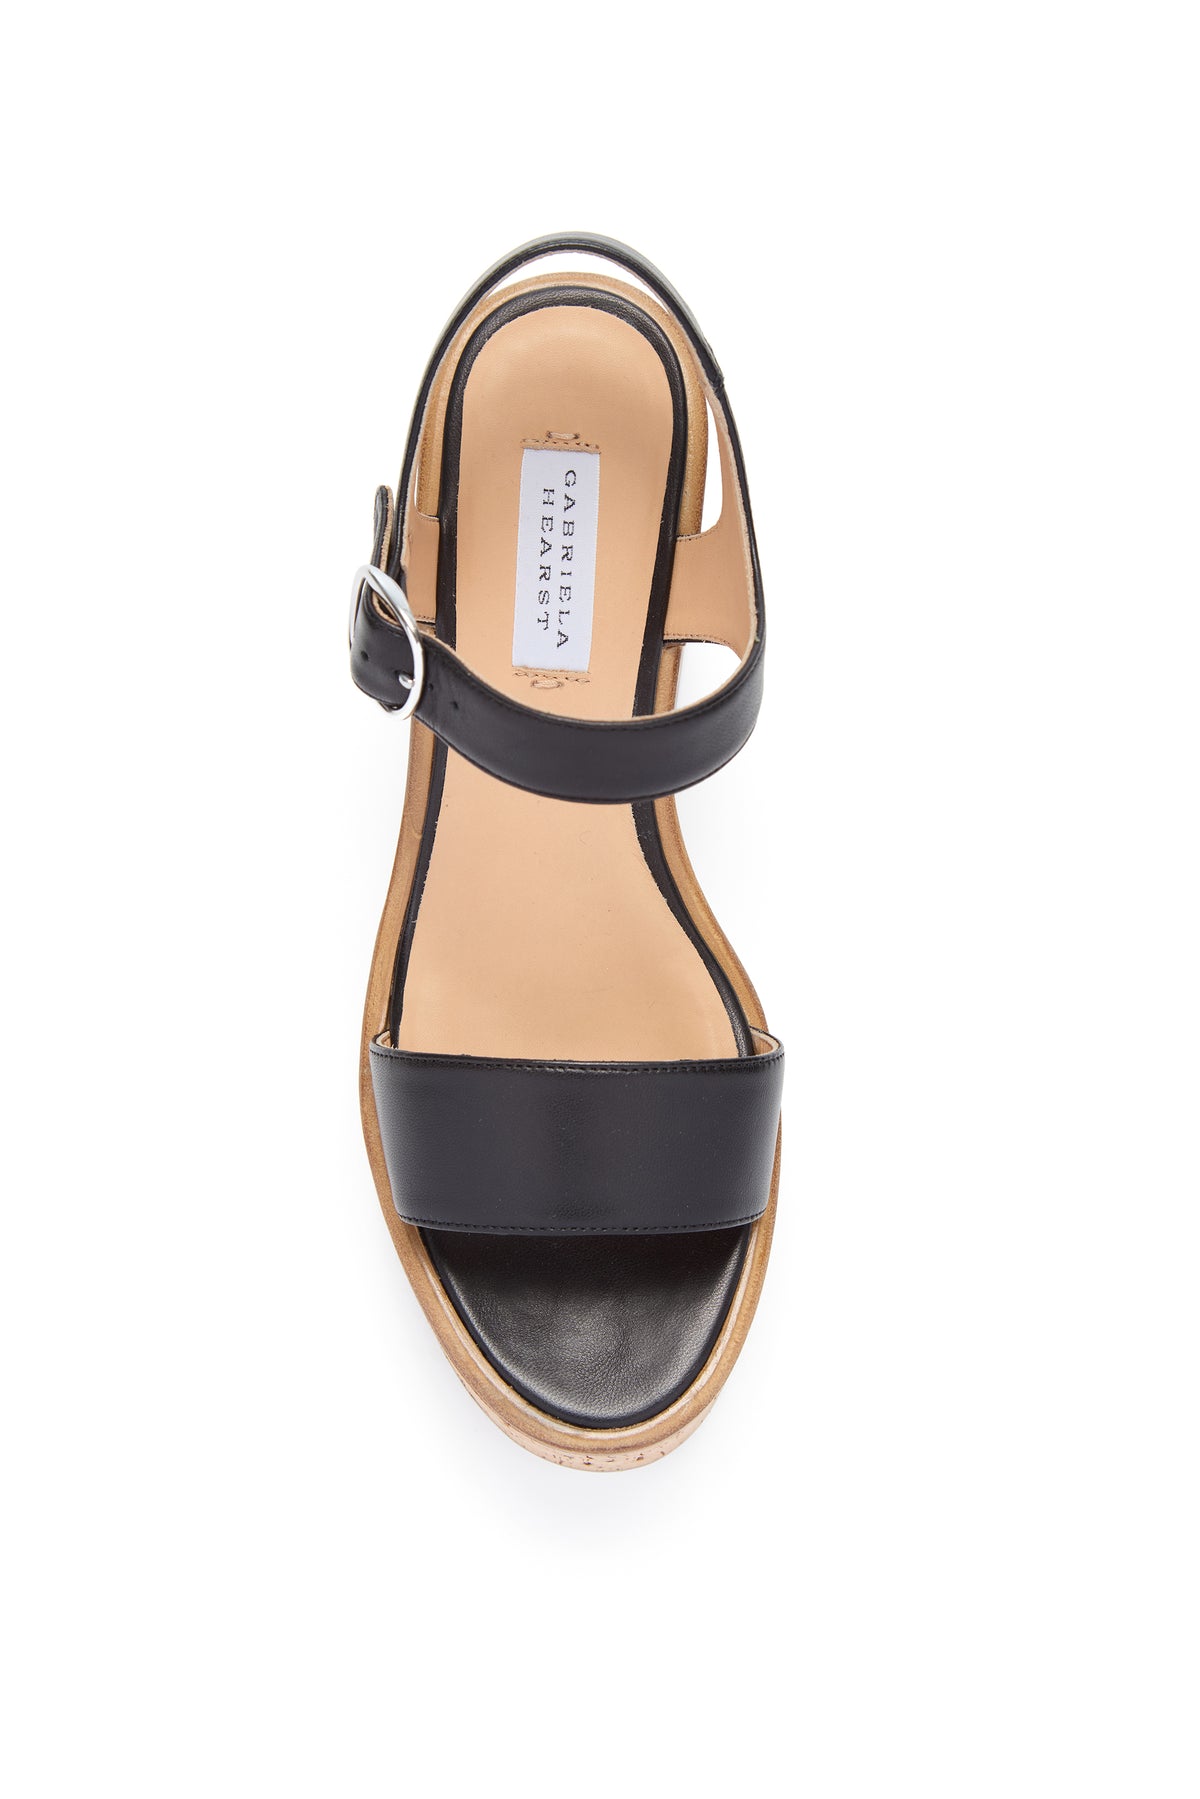 Sardis Platform Sandal in Black Nappa Leather